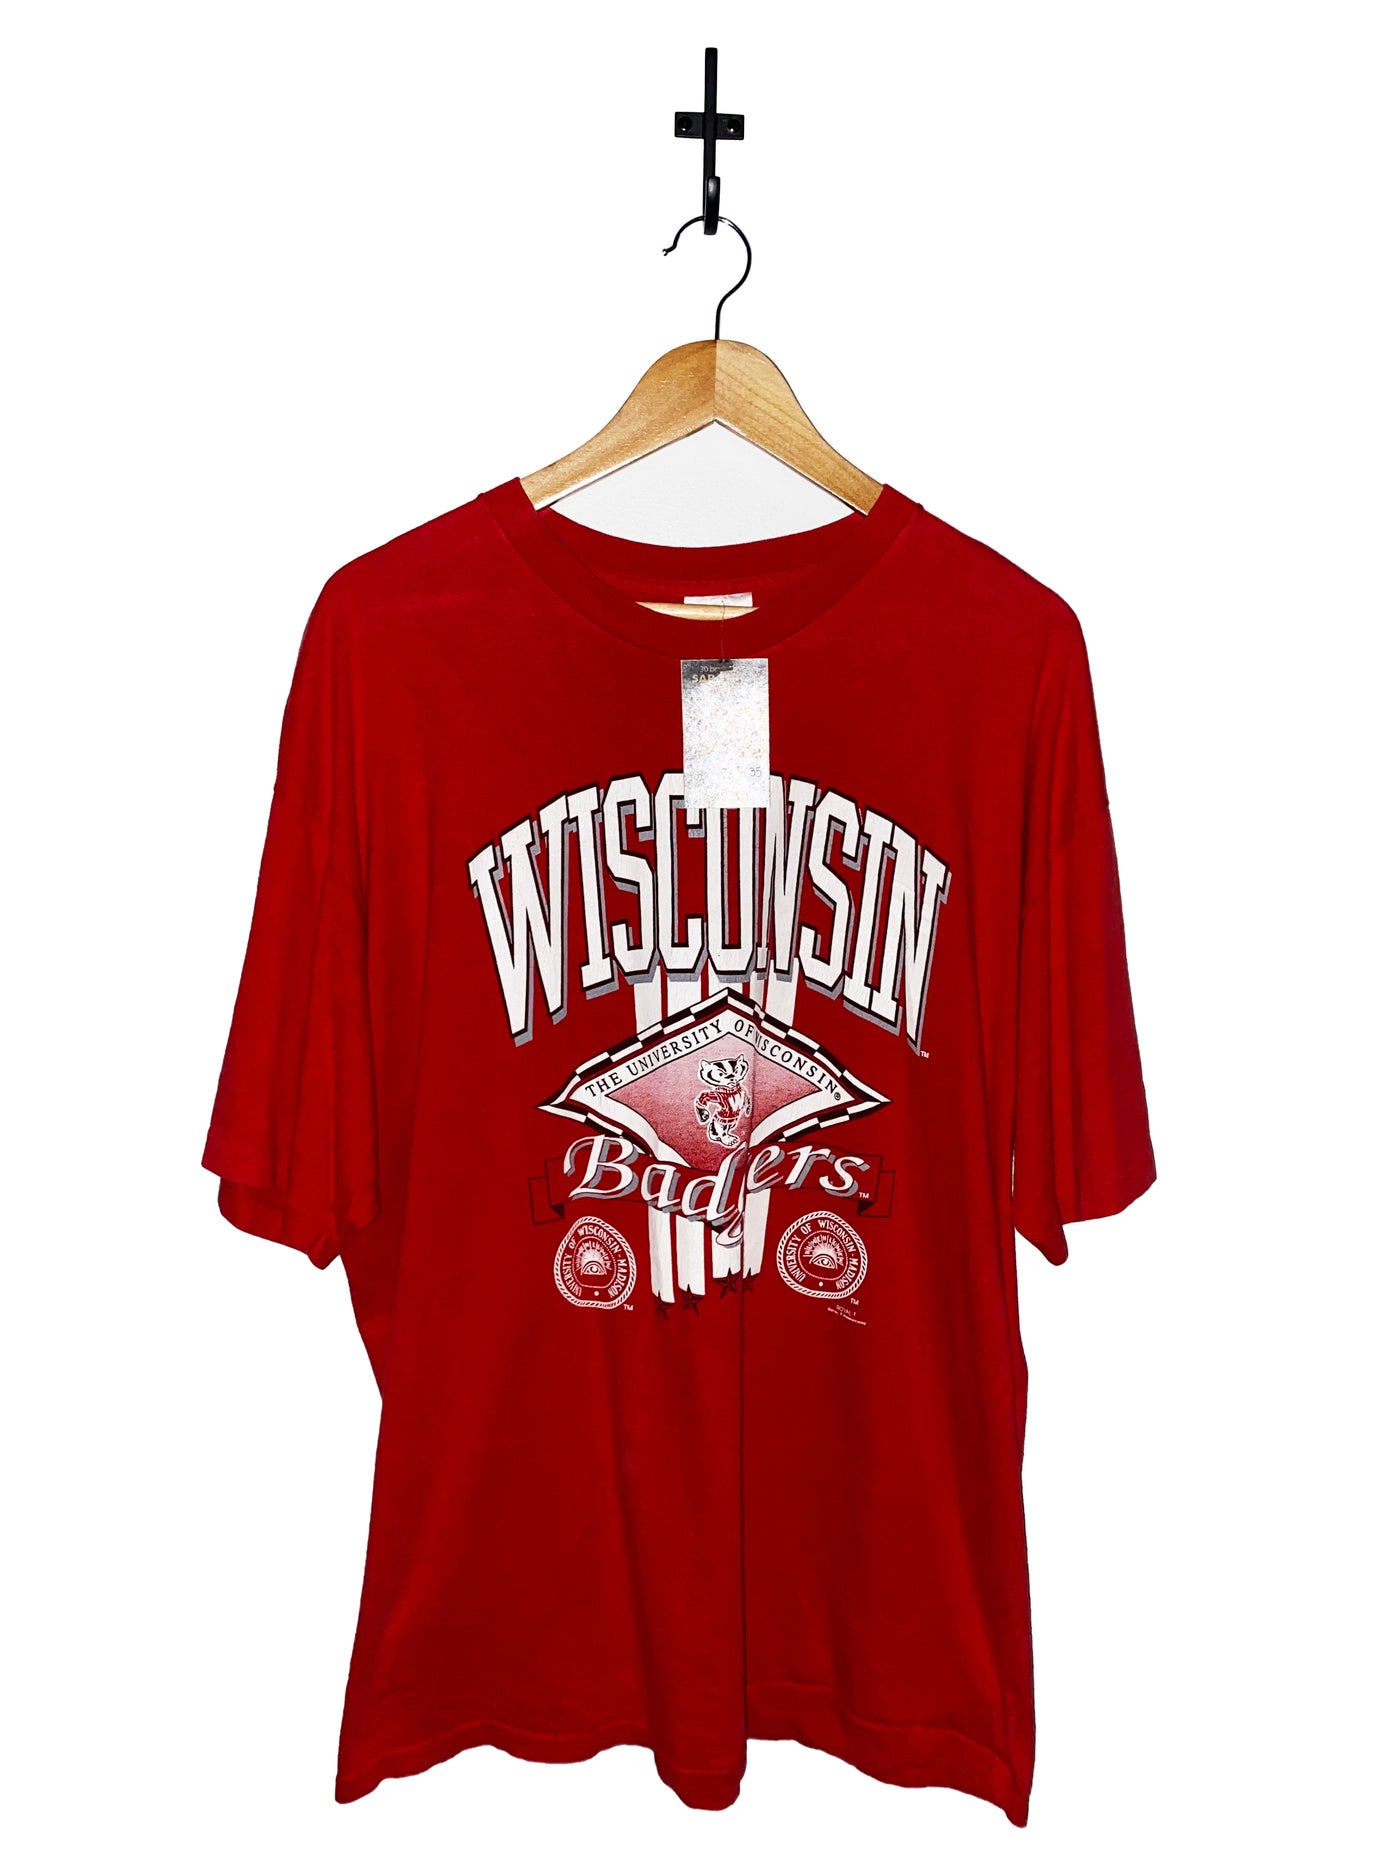 Vintage 80s Wisconsin Badgers T-Shirt